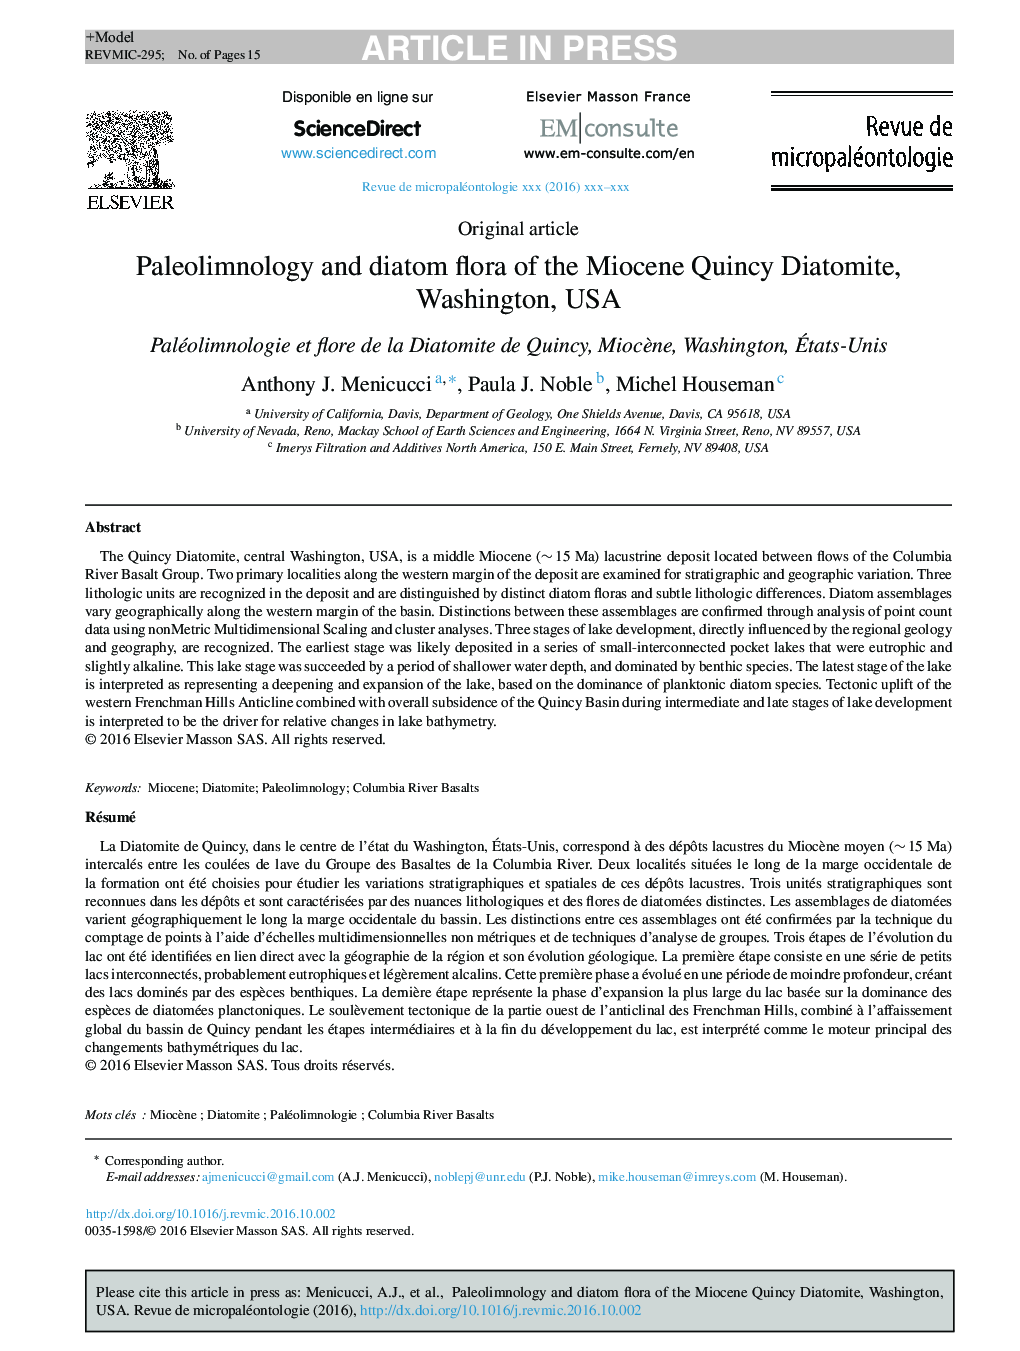 Paleolimnology and diatom flora of the Miocene Quincy Diatomite, Washington, USA